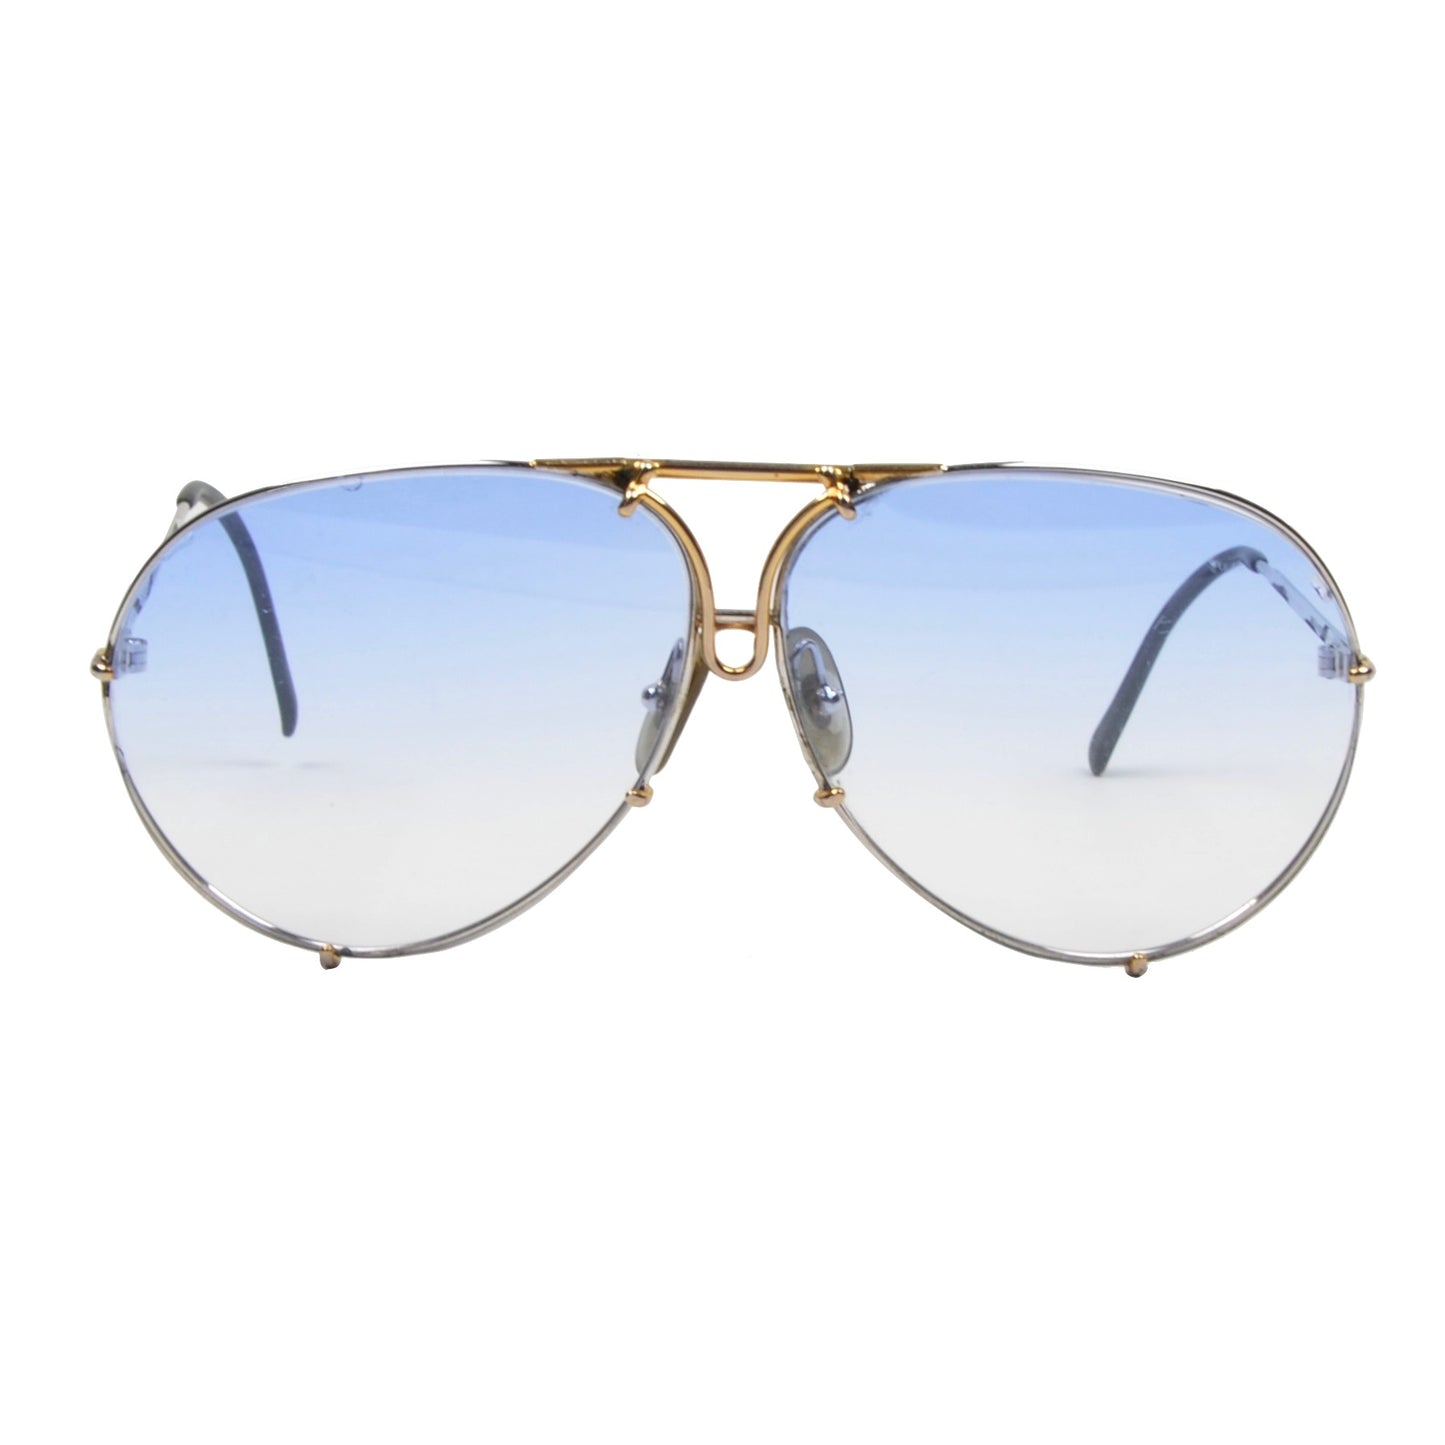 Vintage Porsche Design 5621 Sunglasses - Silver and Blue